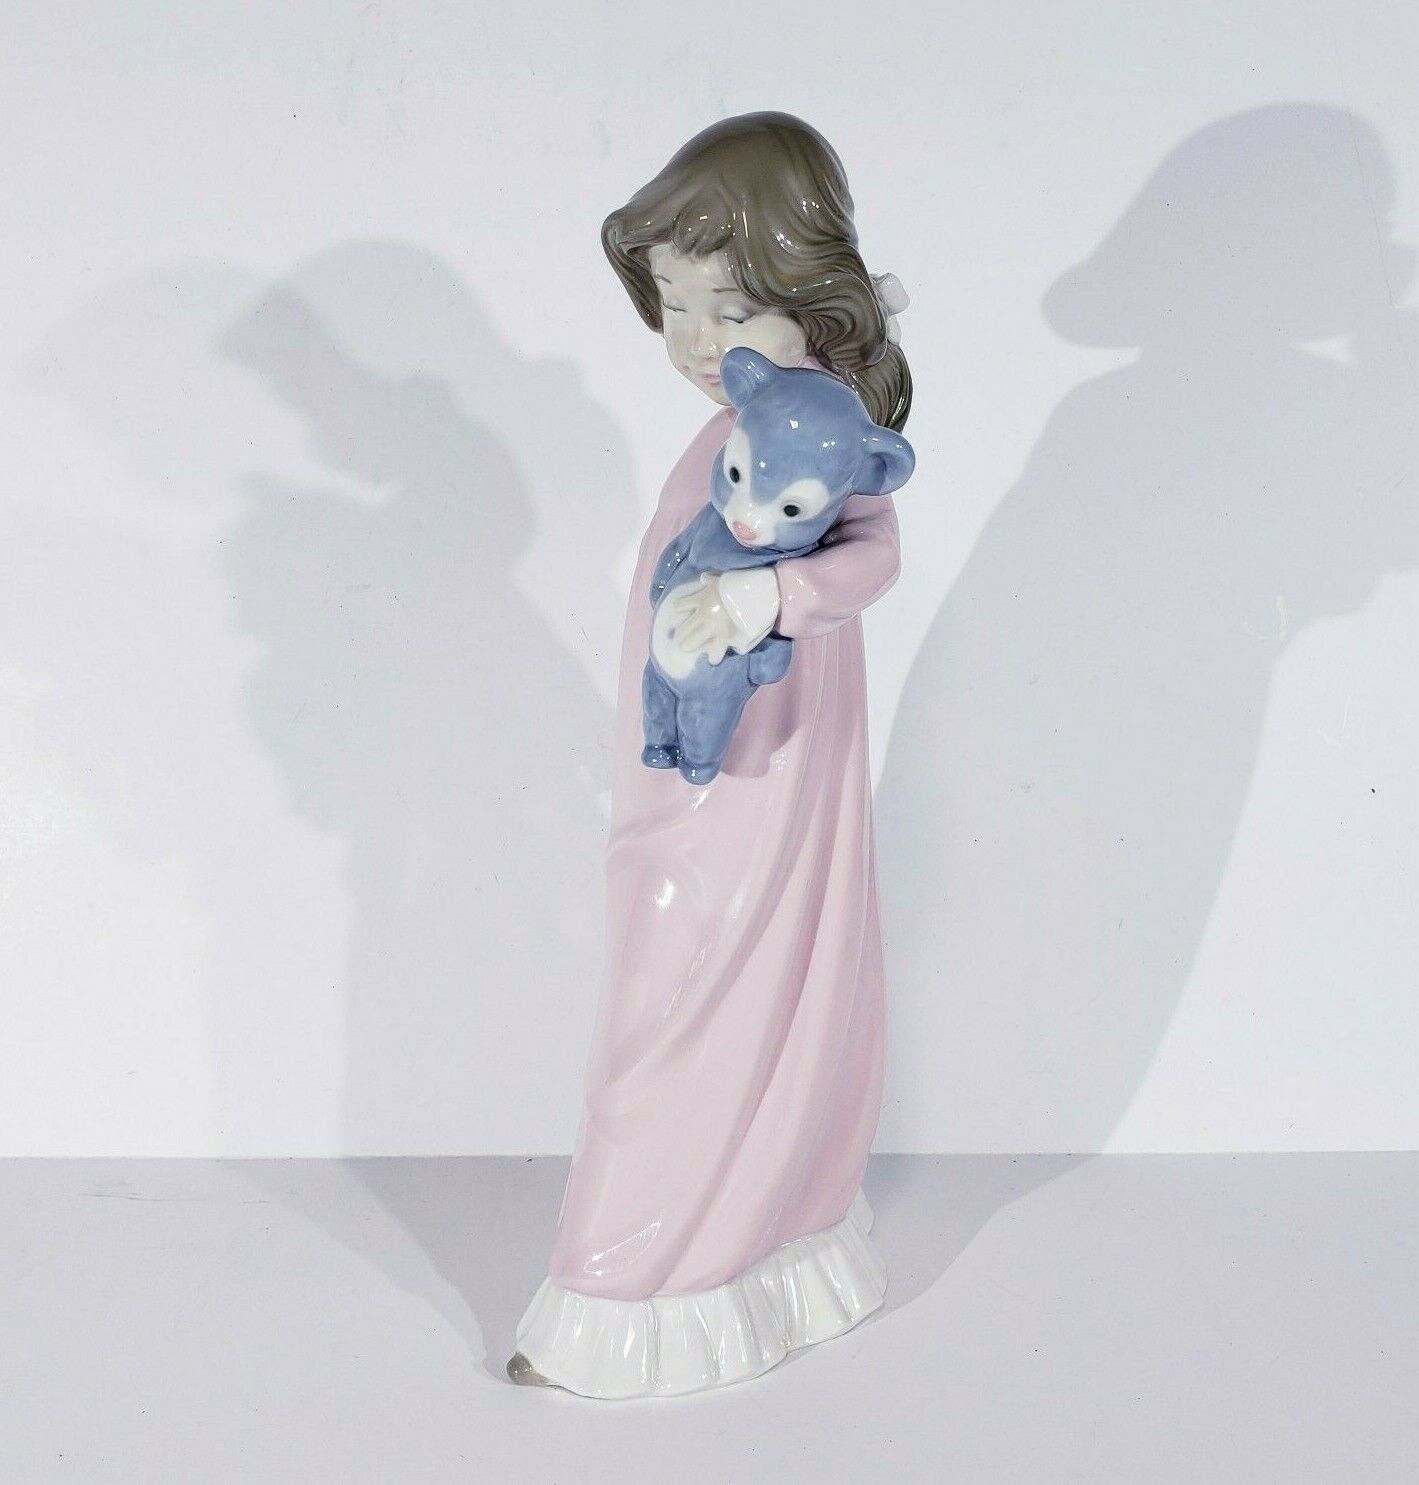 Zaphir Lladro Girl in Pink Nightgown Blue Teddy Bear Figure Made in Spain 12.5